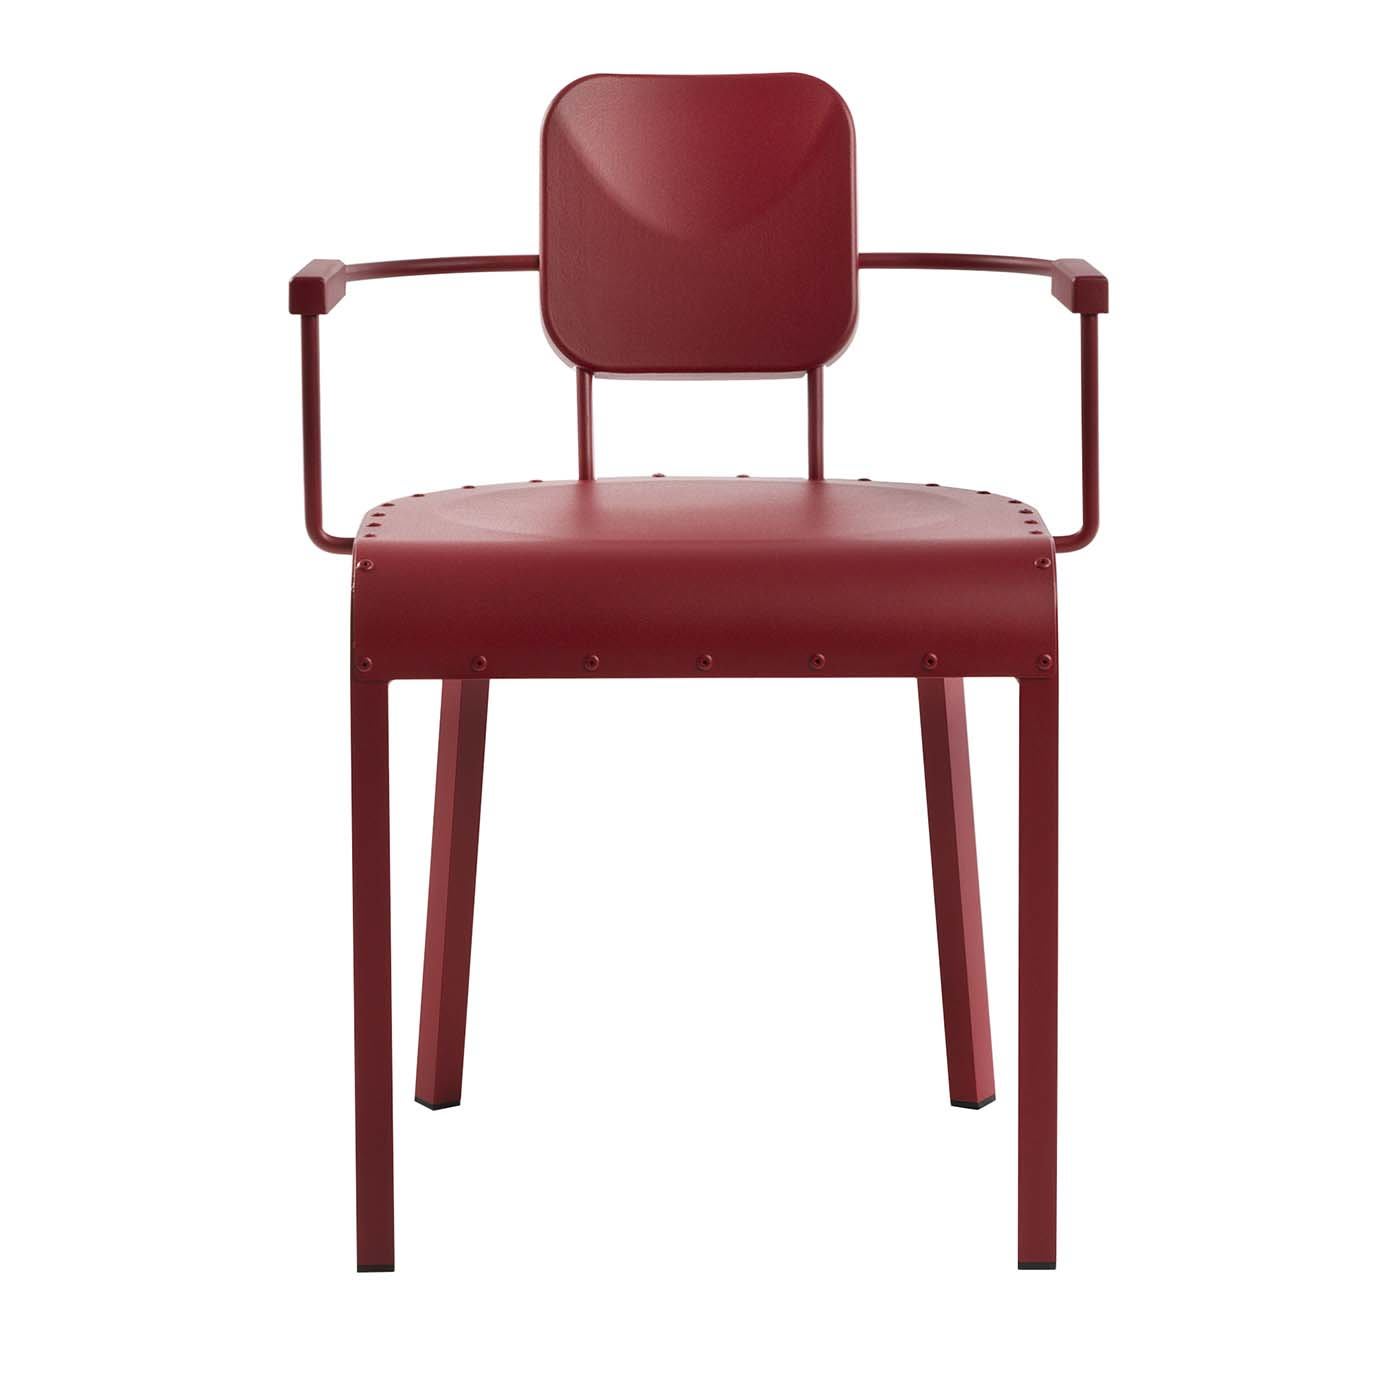 Rock4 Red Chair by Marc Sadler - Da A